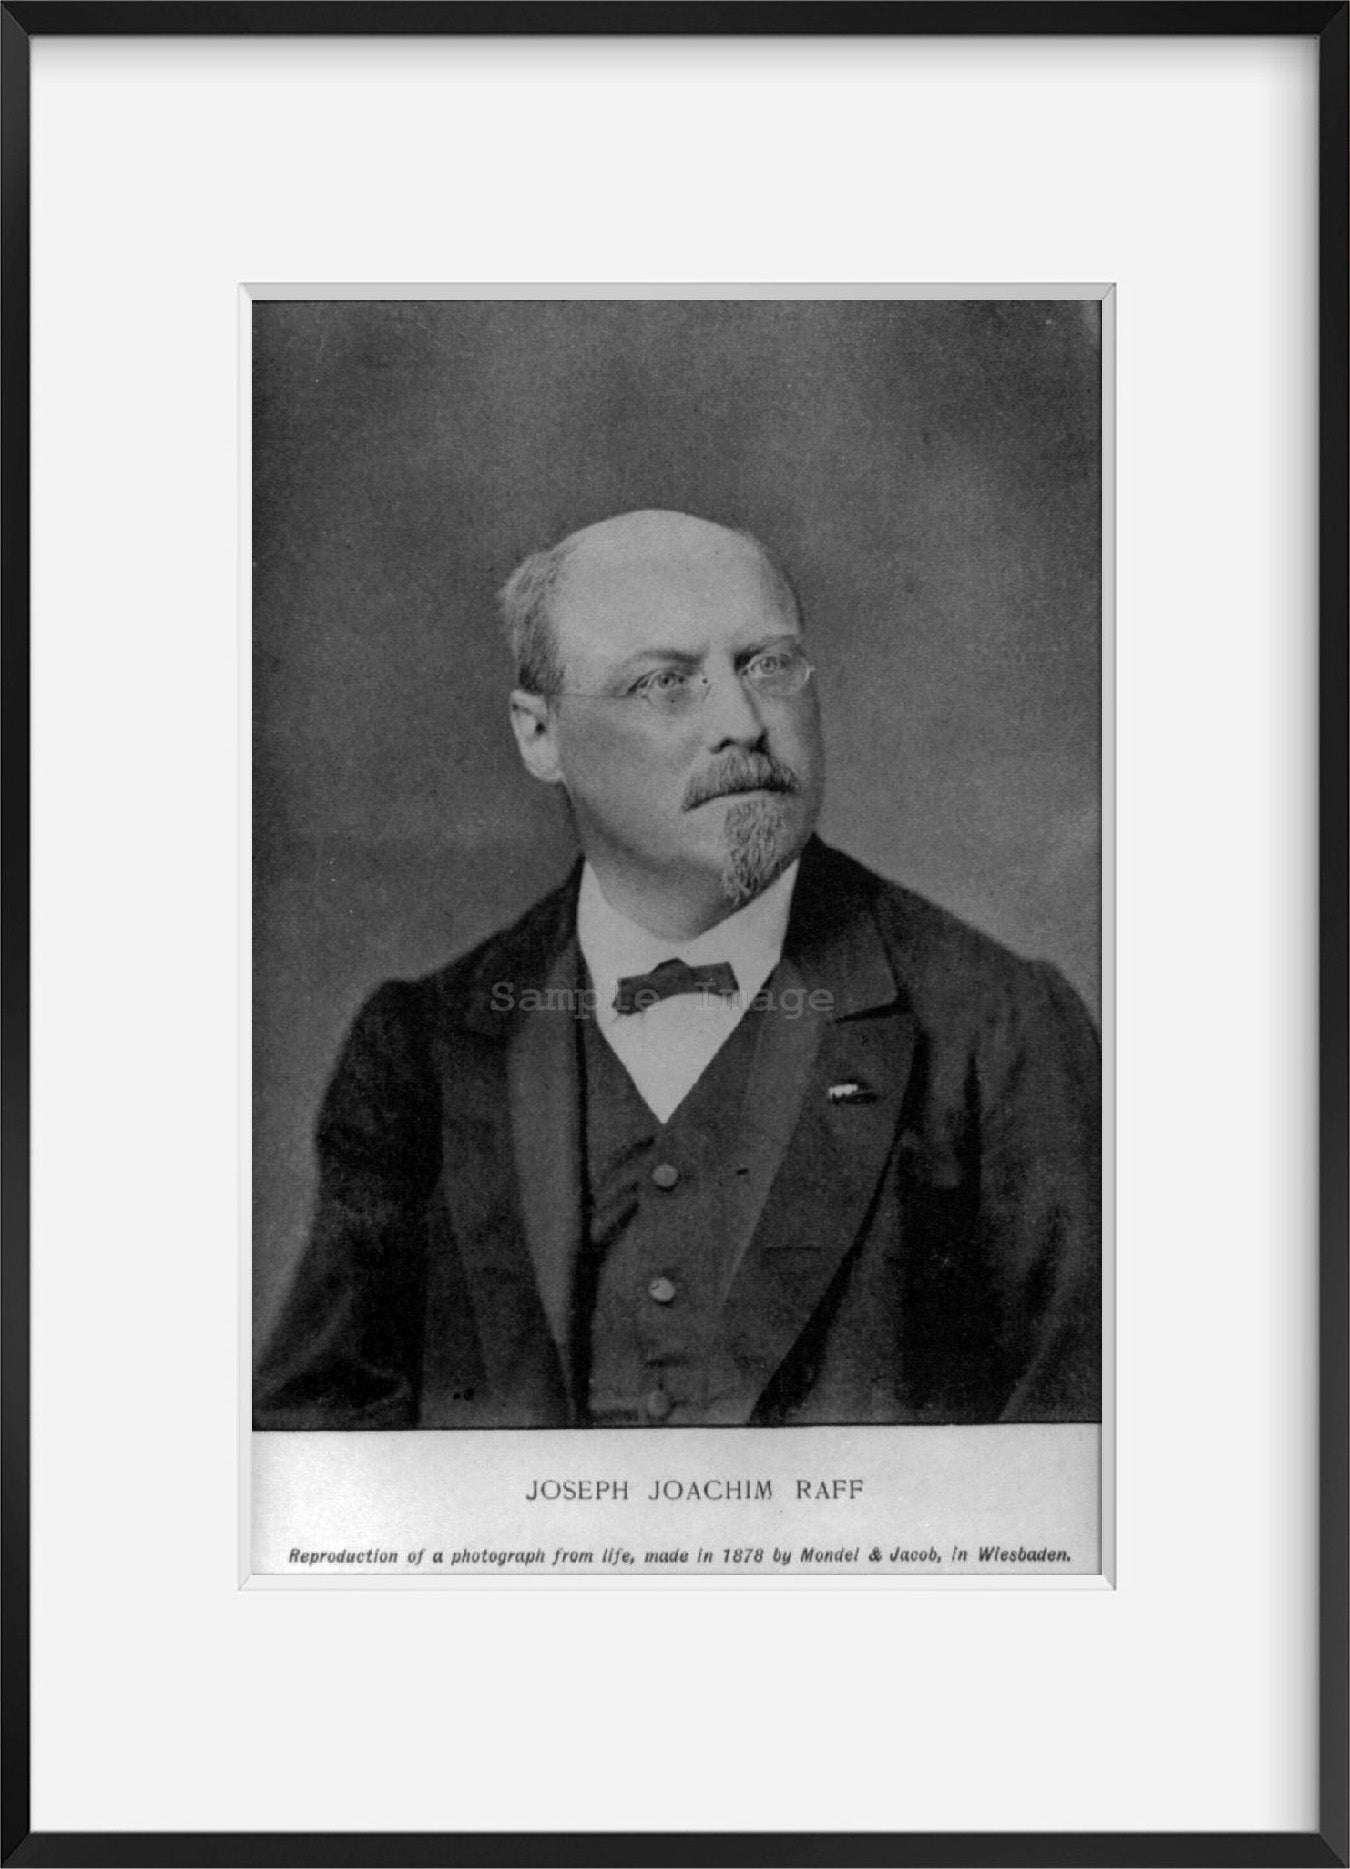 1878 photograph of Joseph Joachim Raff